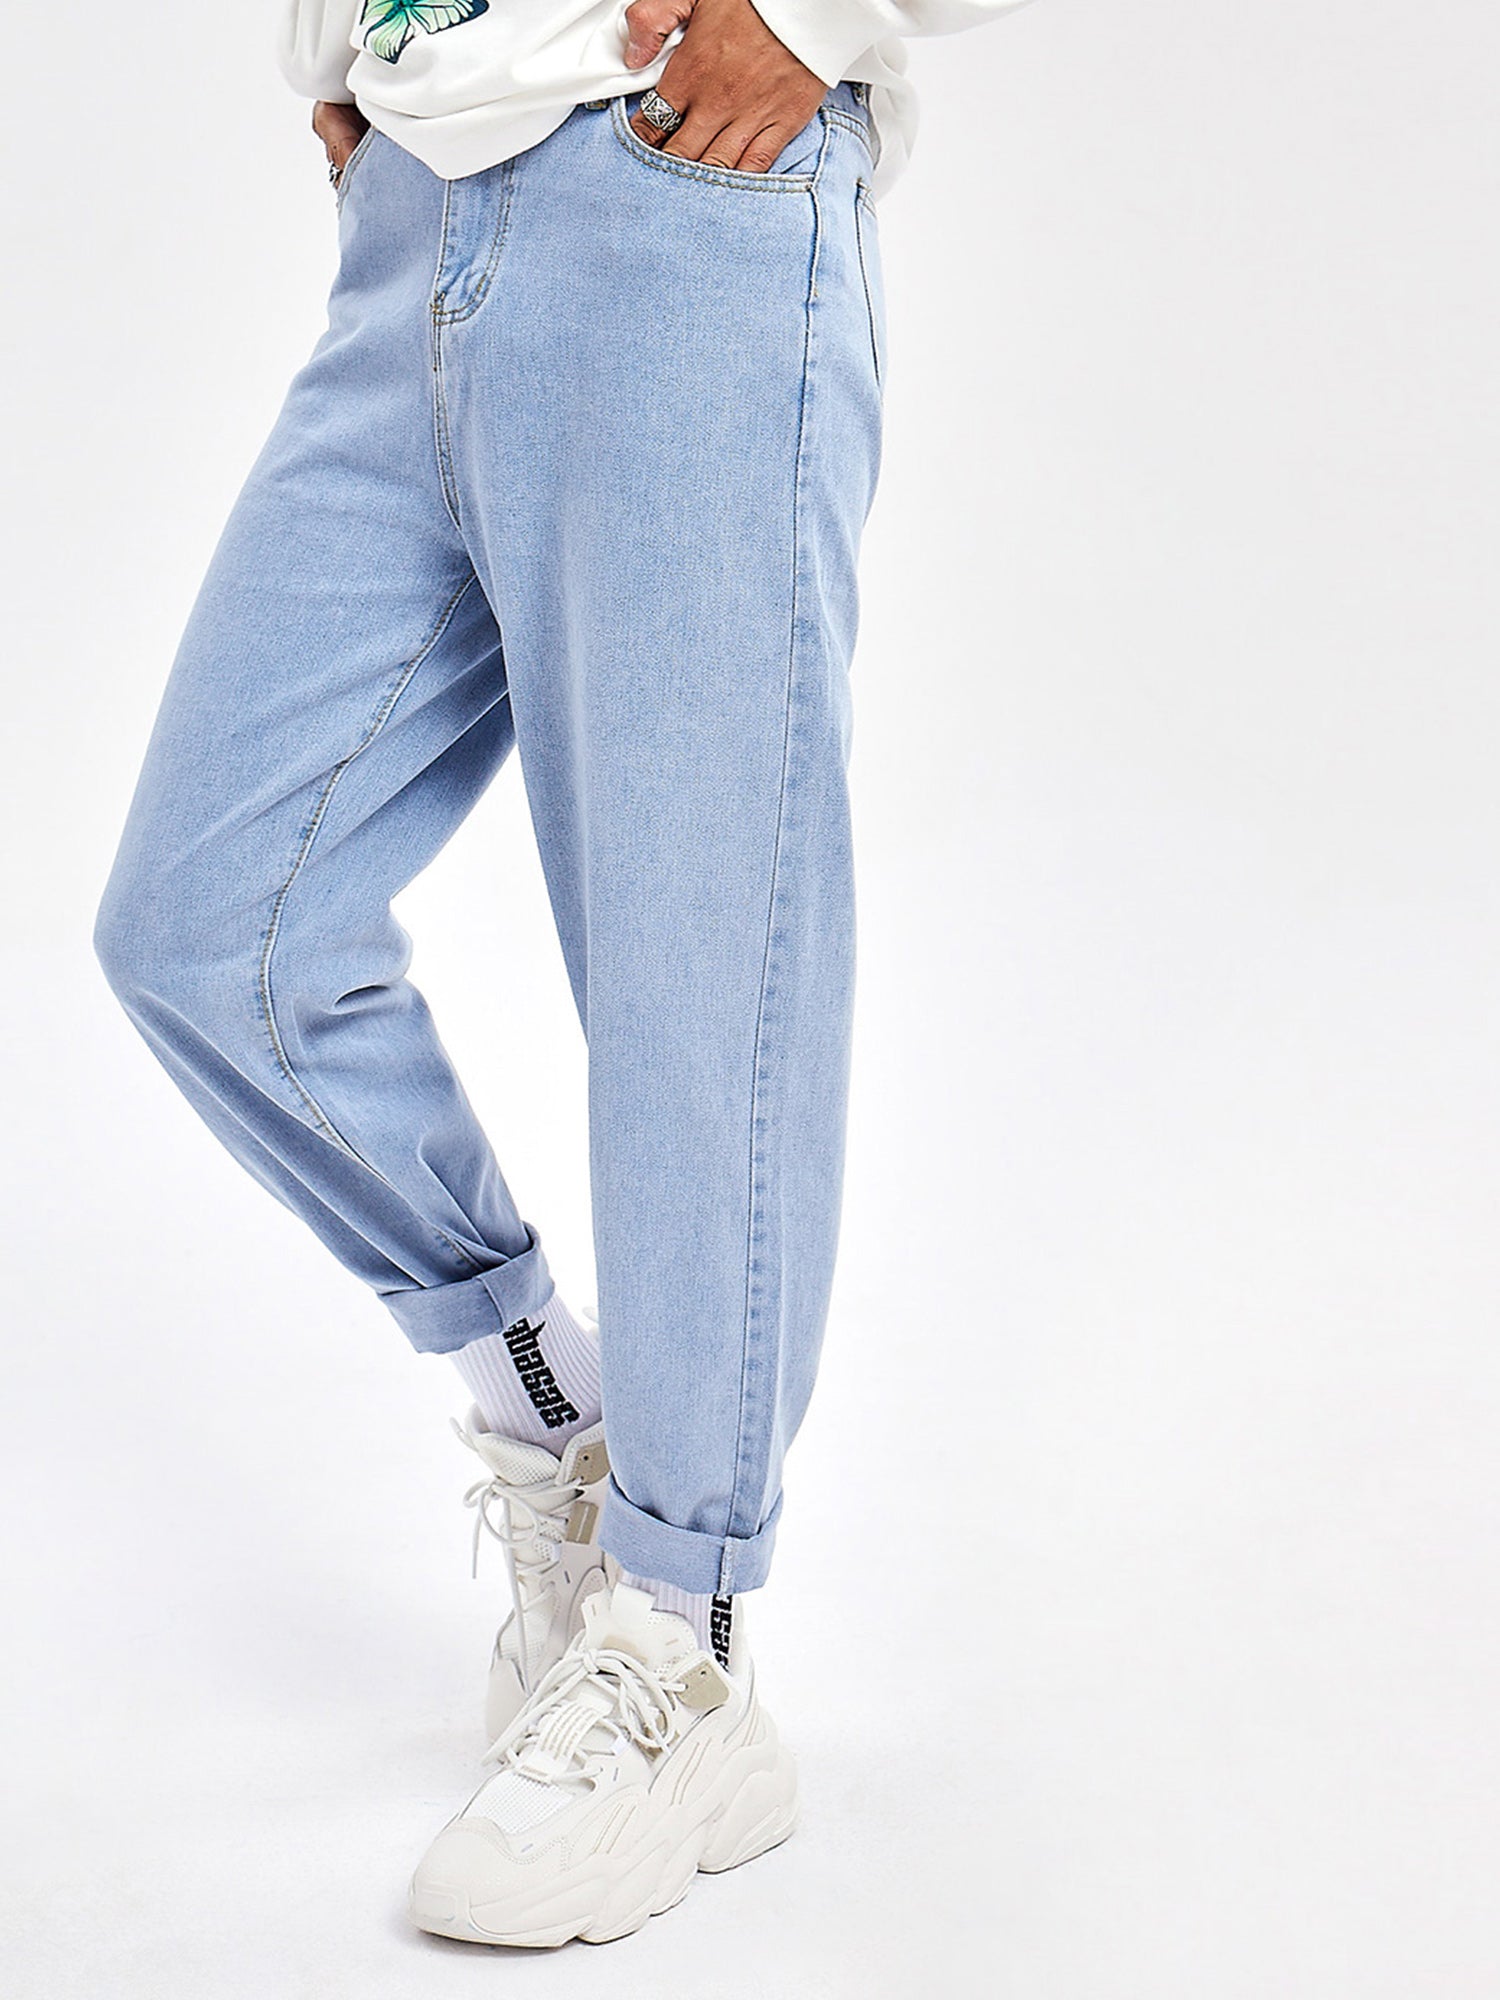 JUSTNOTAG Jeans larghi e lunghi azzurri con stampa HipHop da strada casual